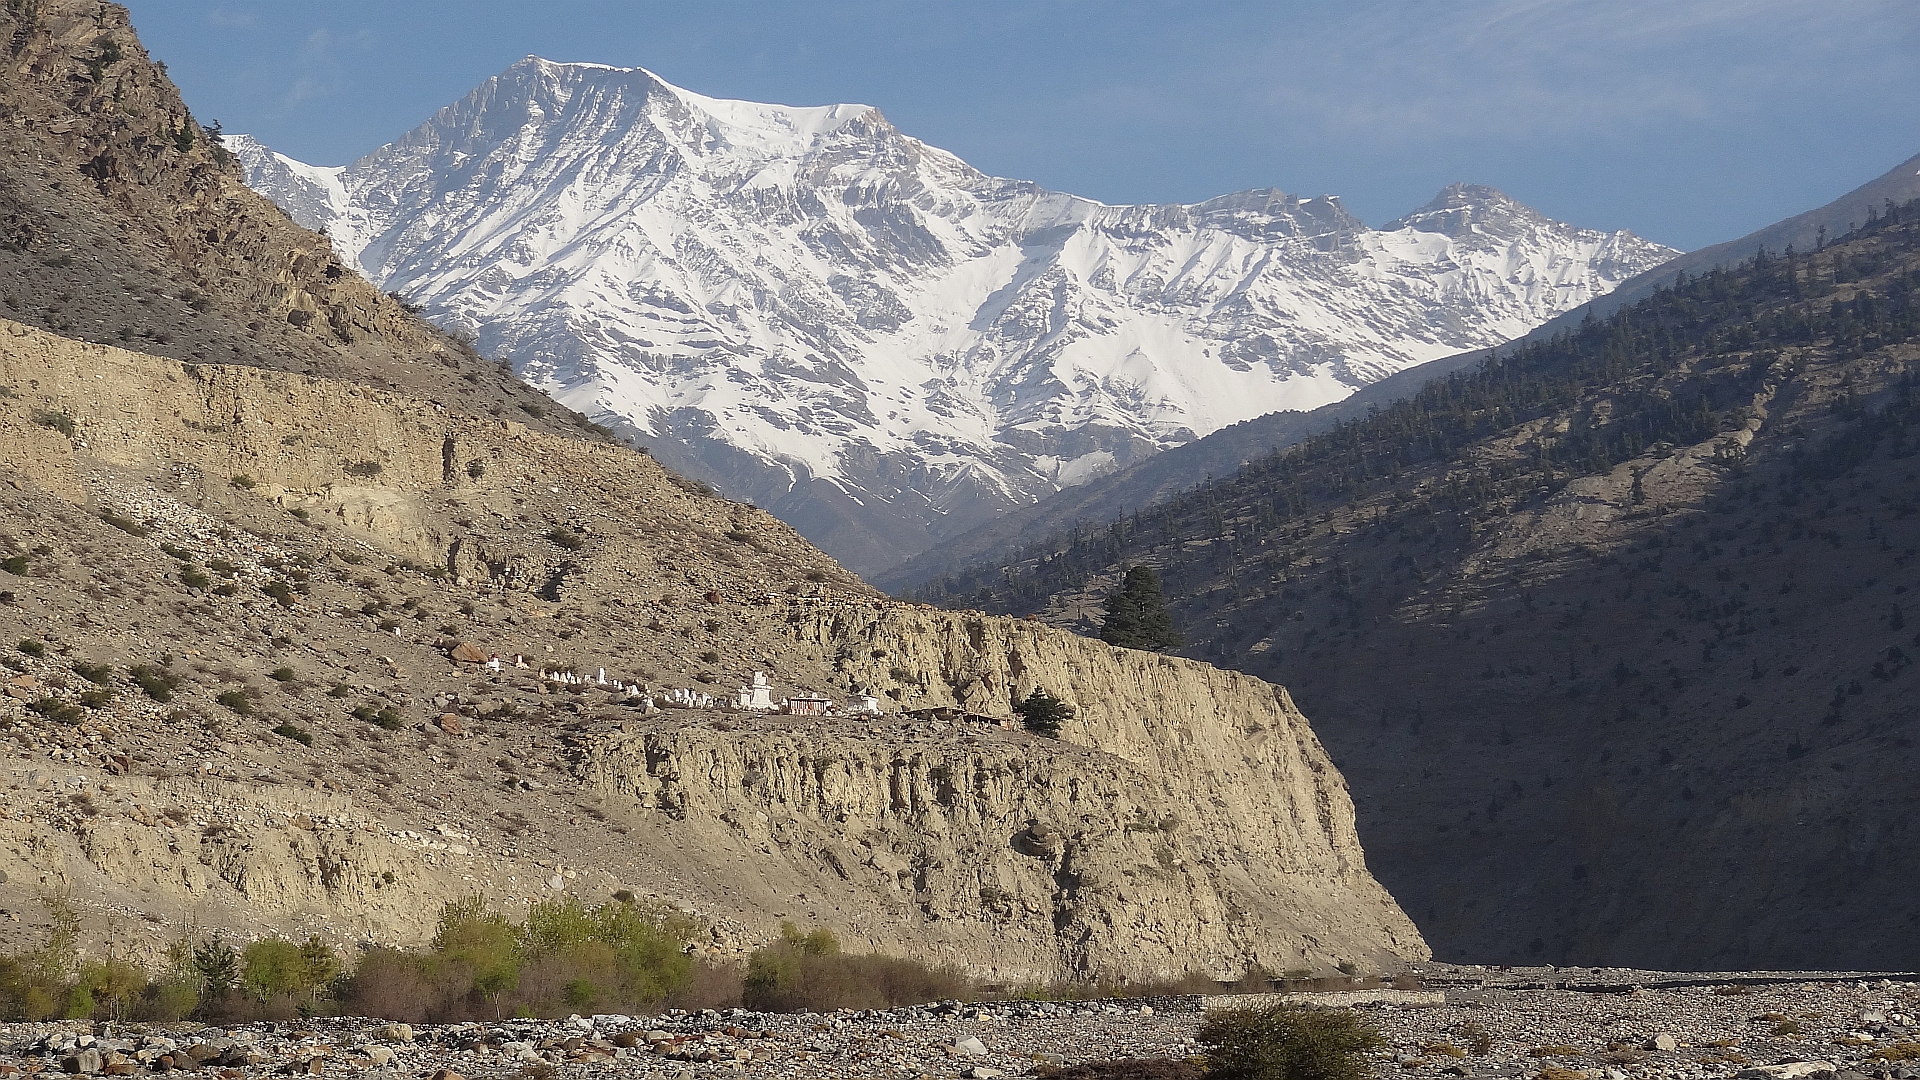                                        Im Kali Gandaki Tal kann bei Niedrigwasser gewandert werden - ebenso fahren hier Motorfahrzeuge